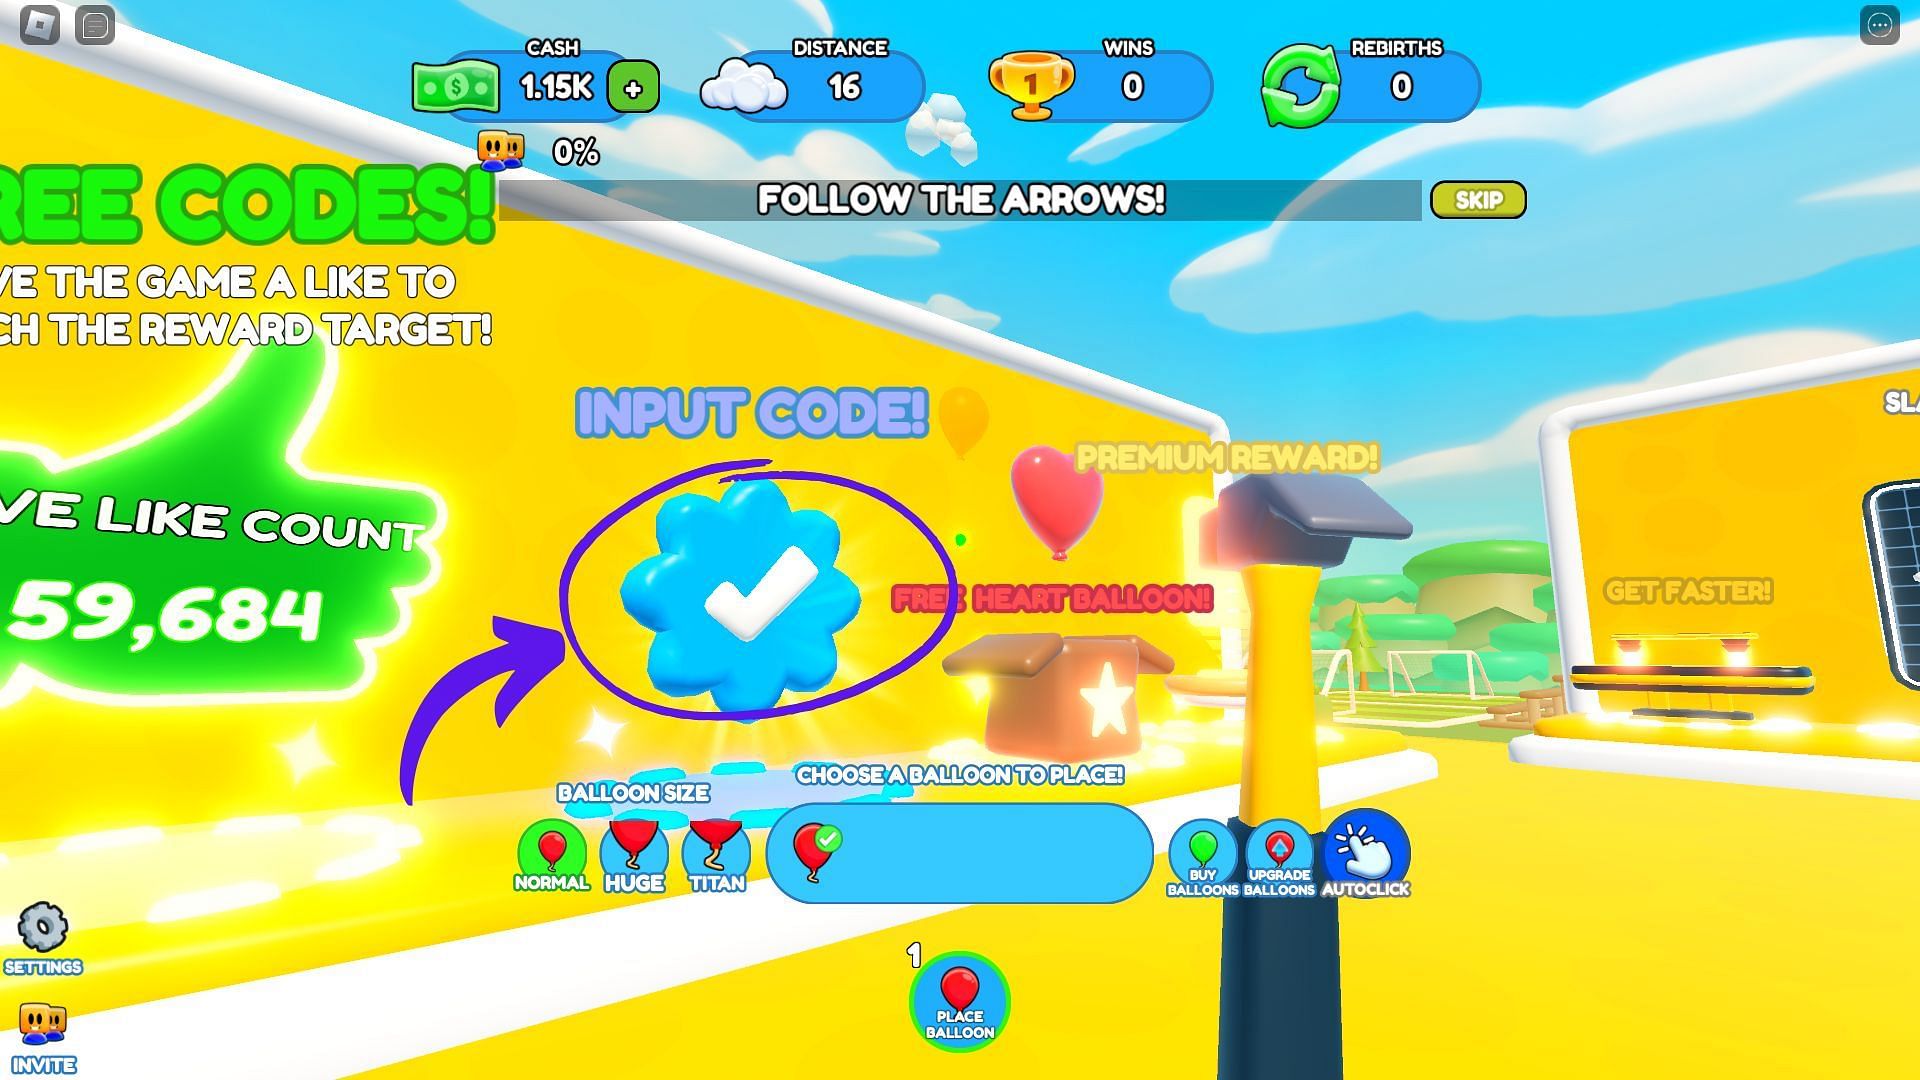 How to redeem codes for Balloon Simulator (Image via Roblox || Sportskeeda)